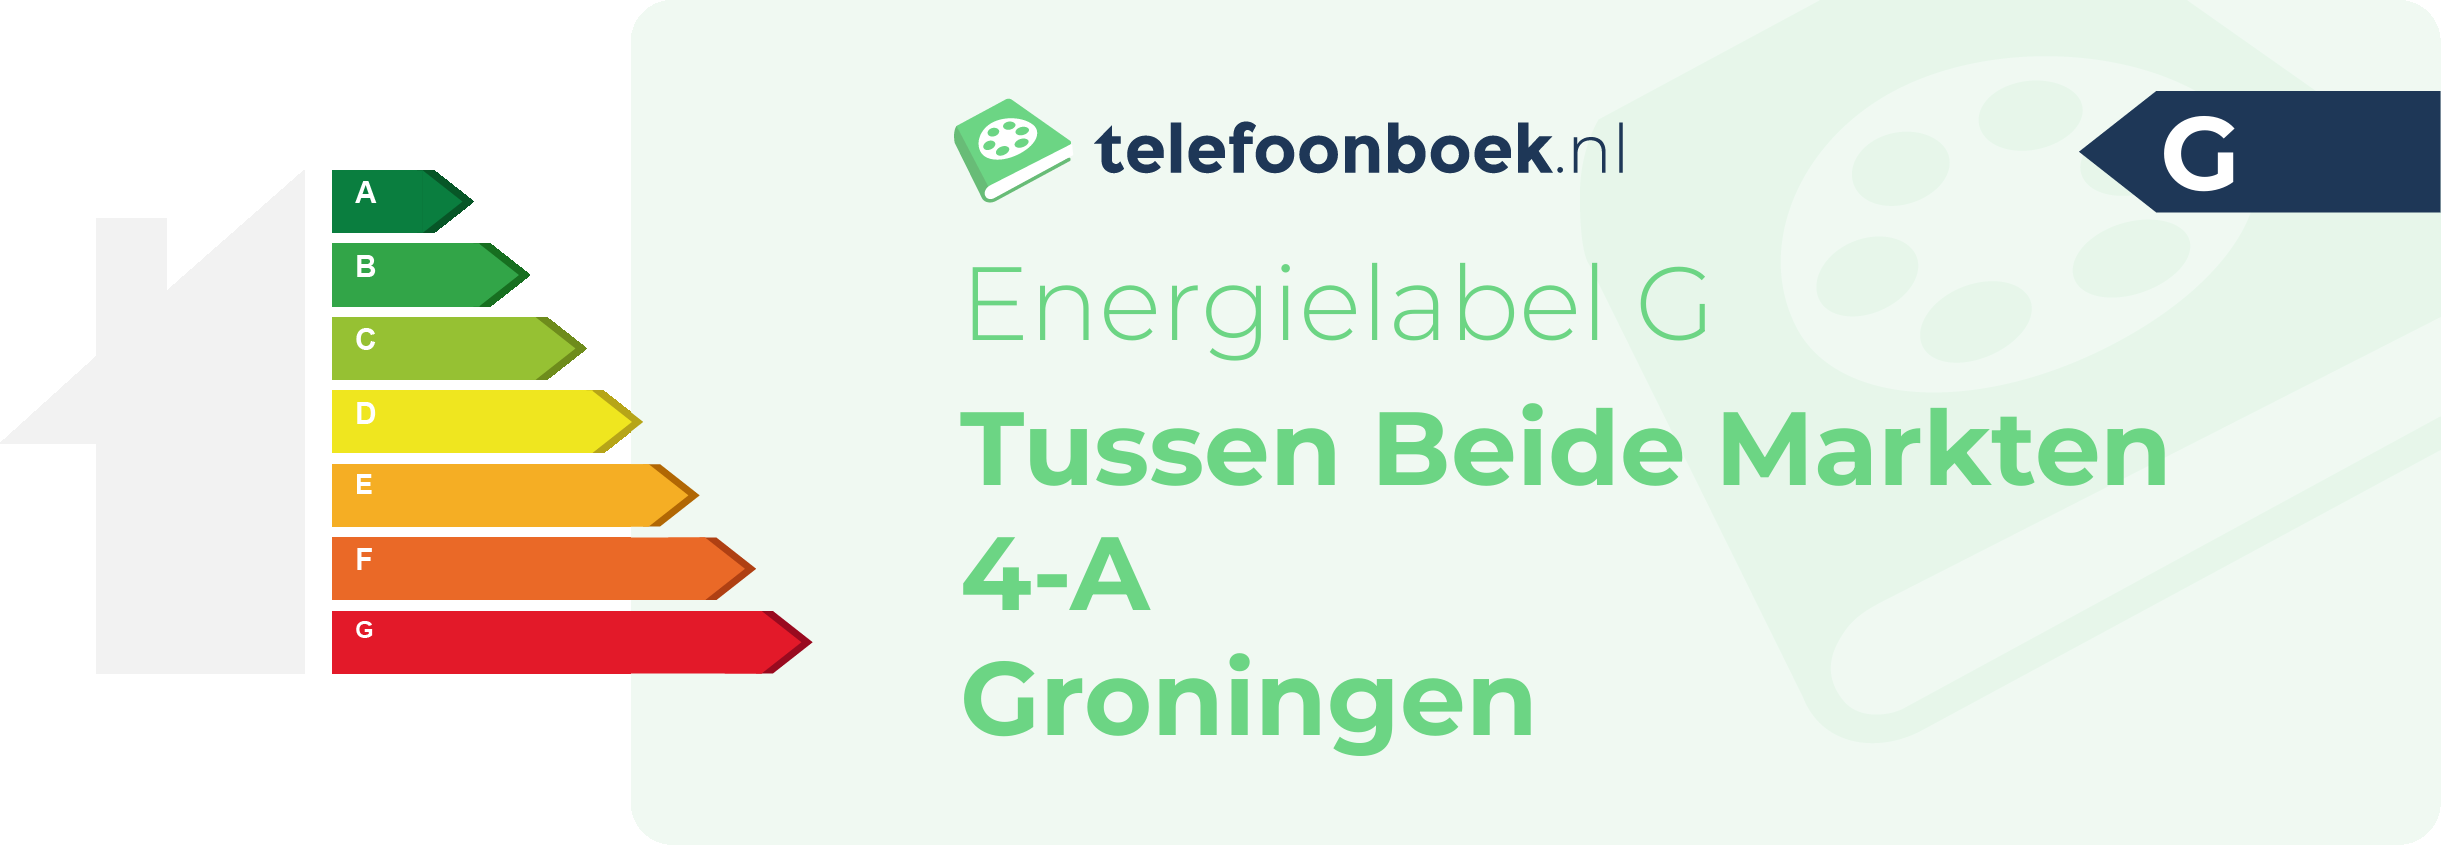 Energielabel Tussen Beide Markten 4-A Groningen